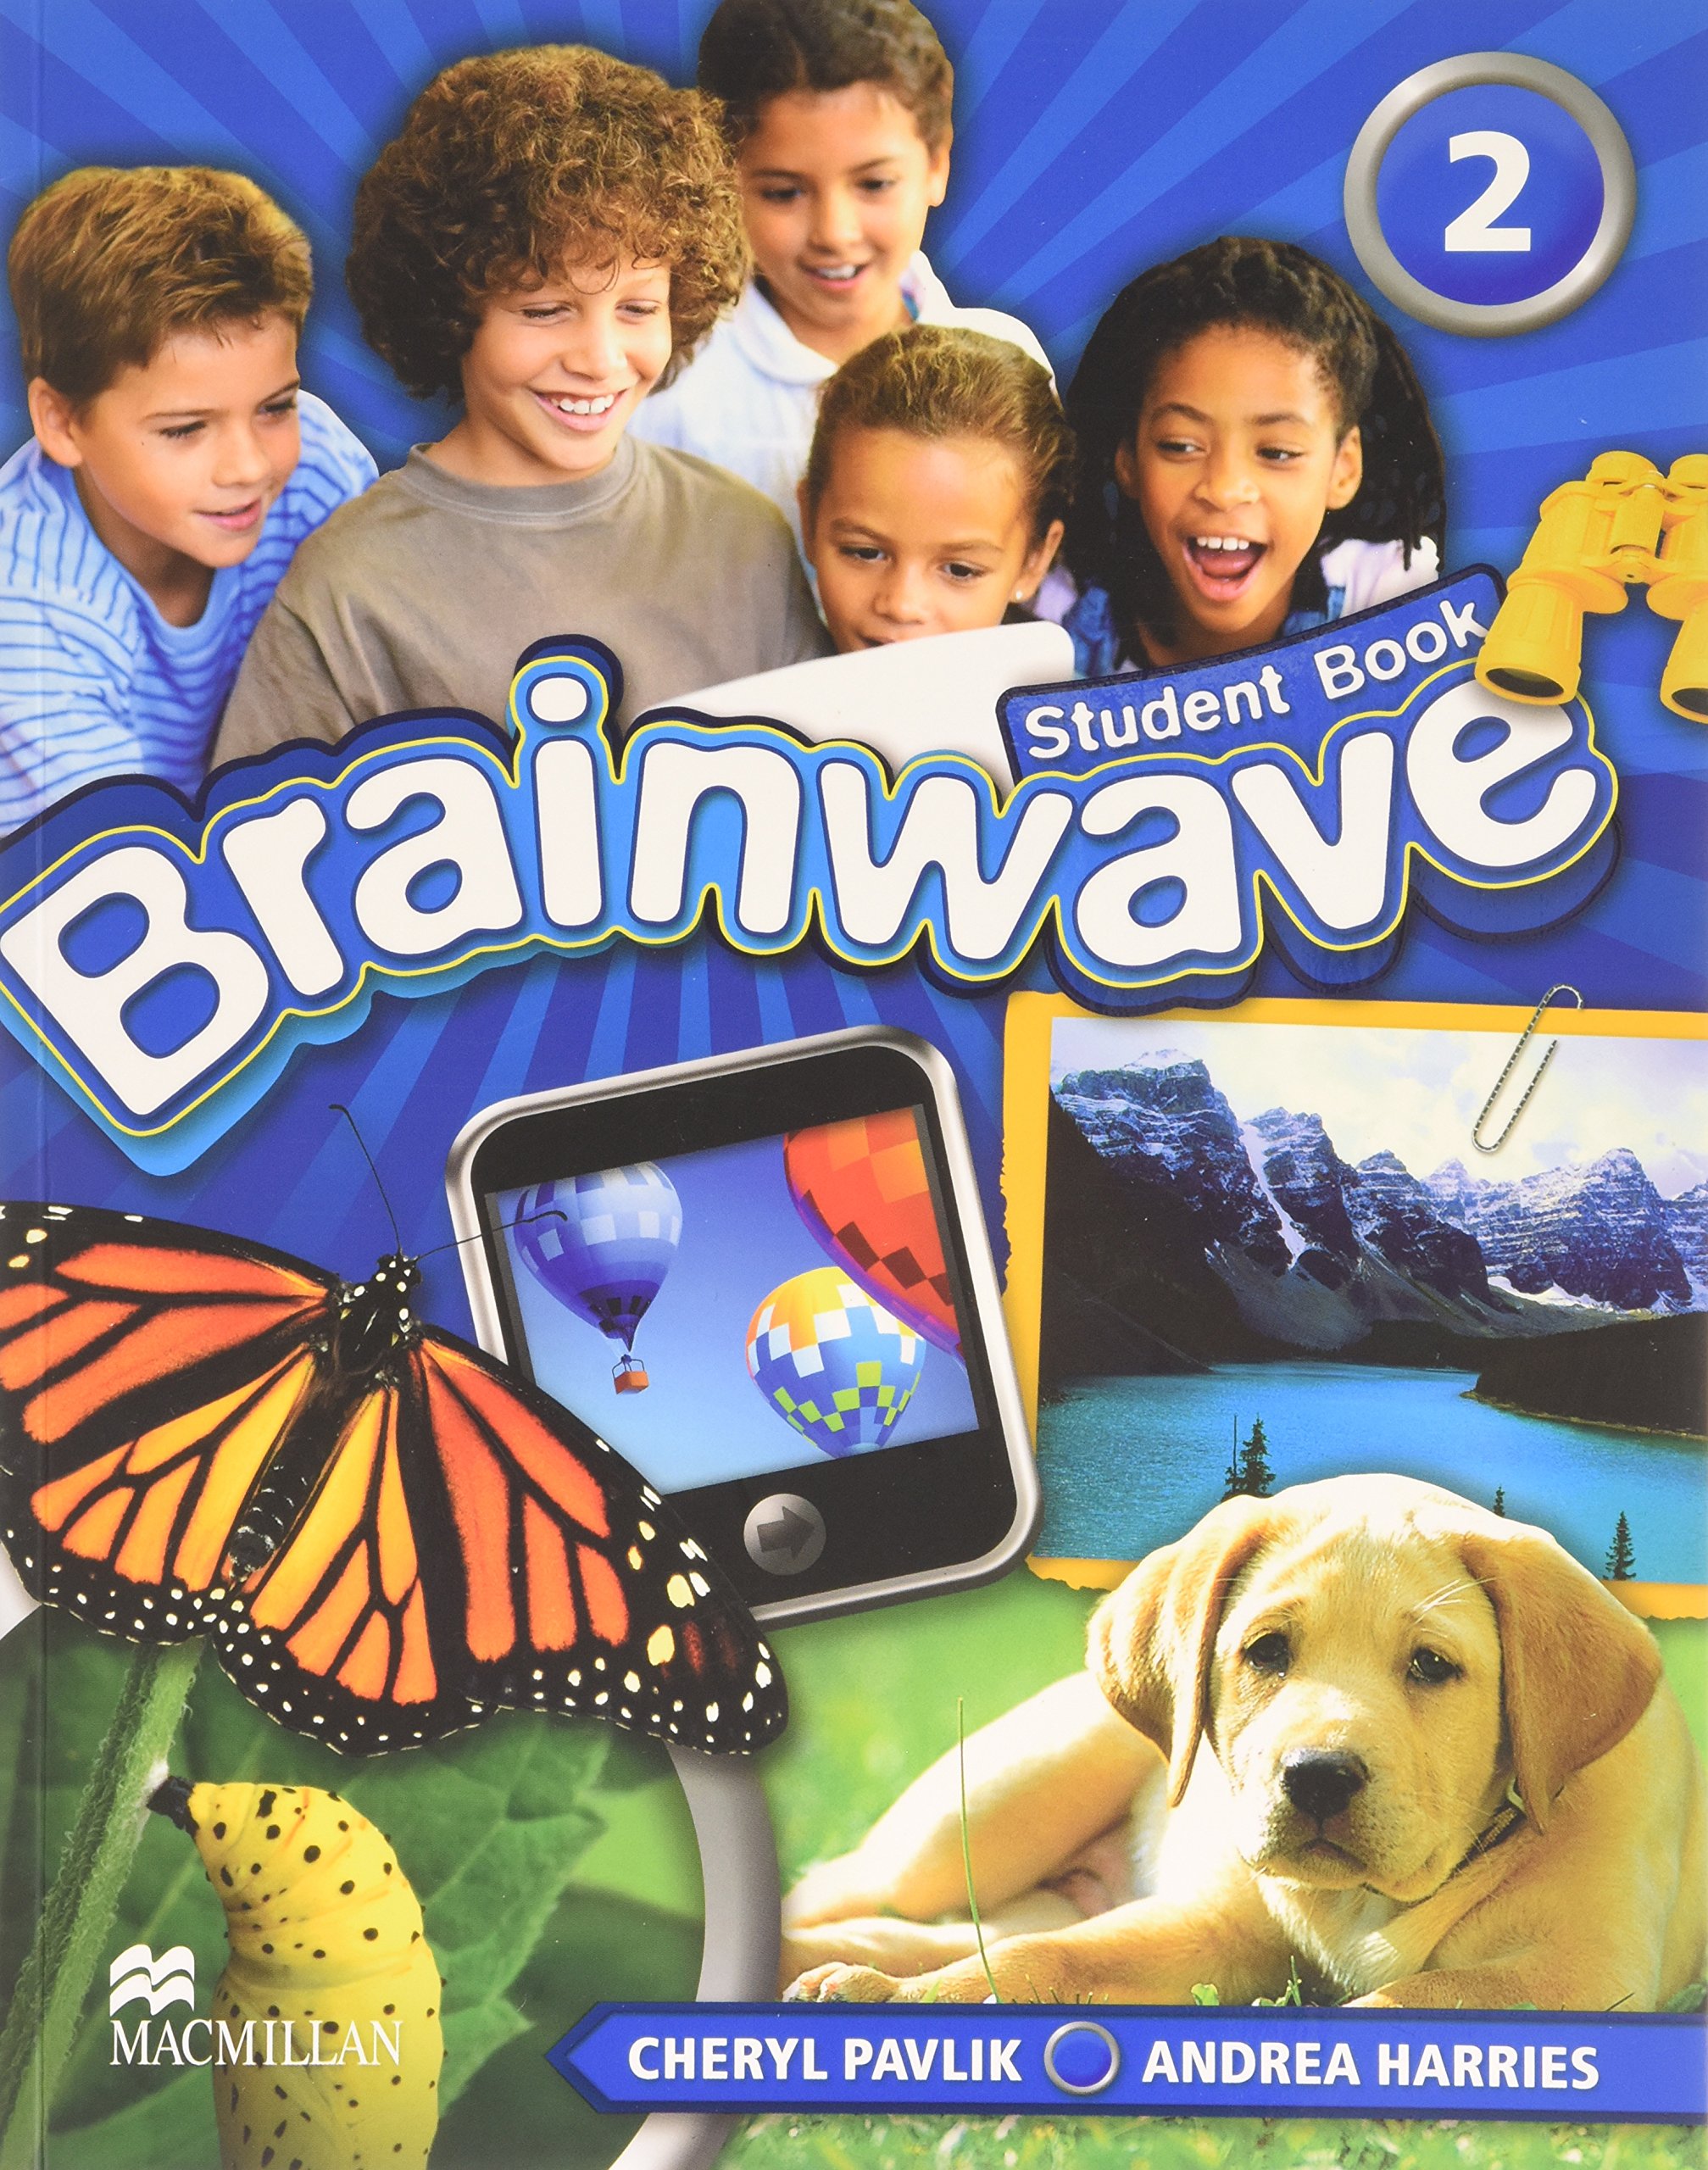 Brainwave 2 - Student Book | Cheryl Pavlik, Andrea Harries